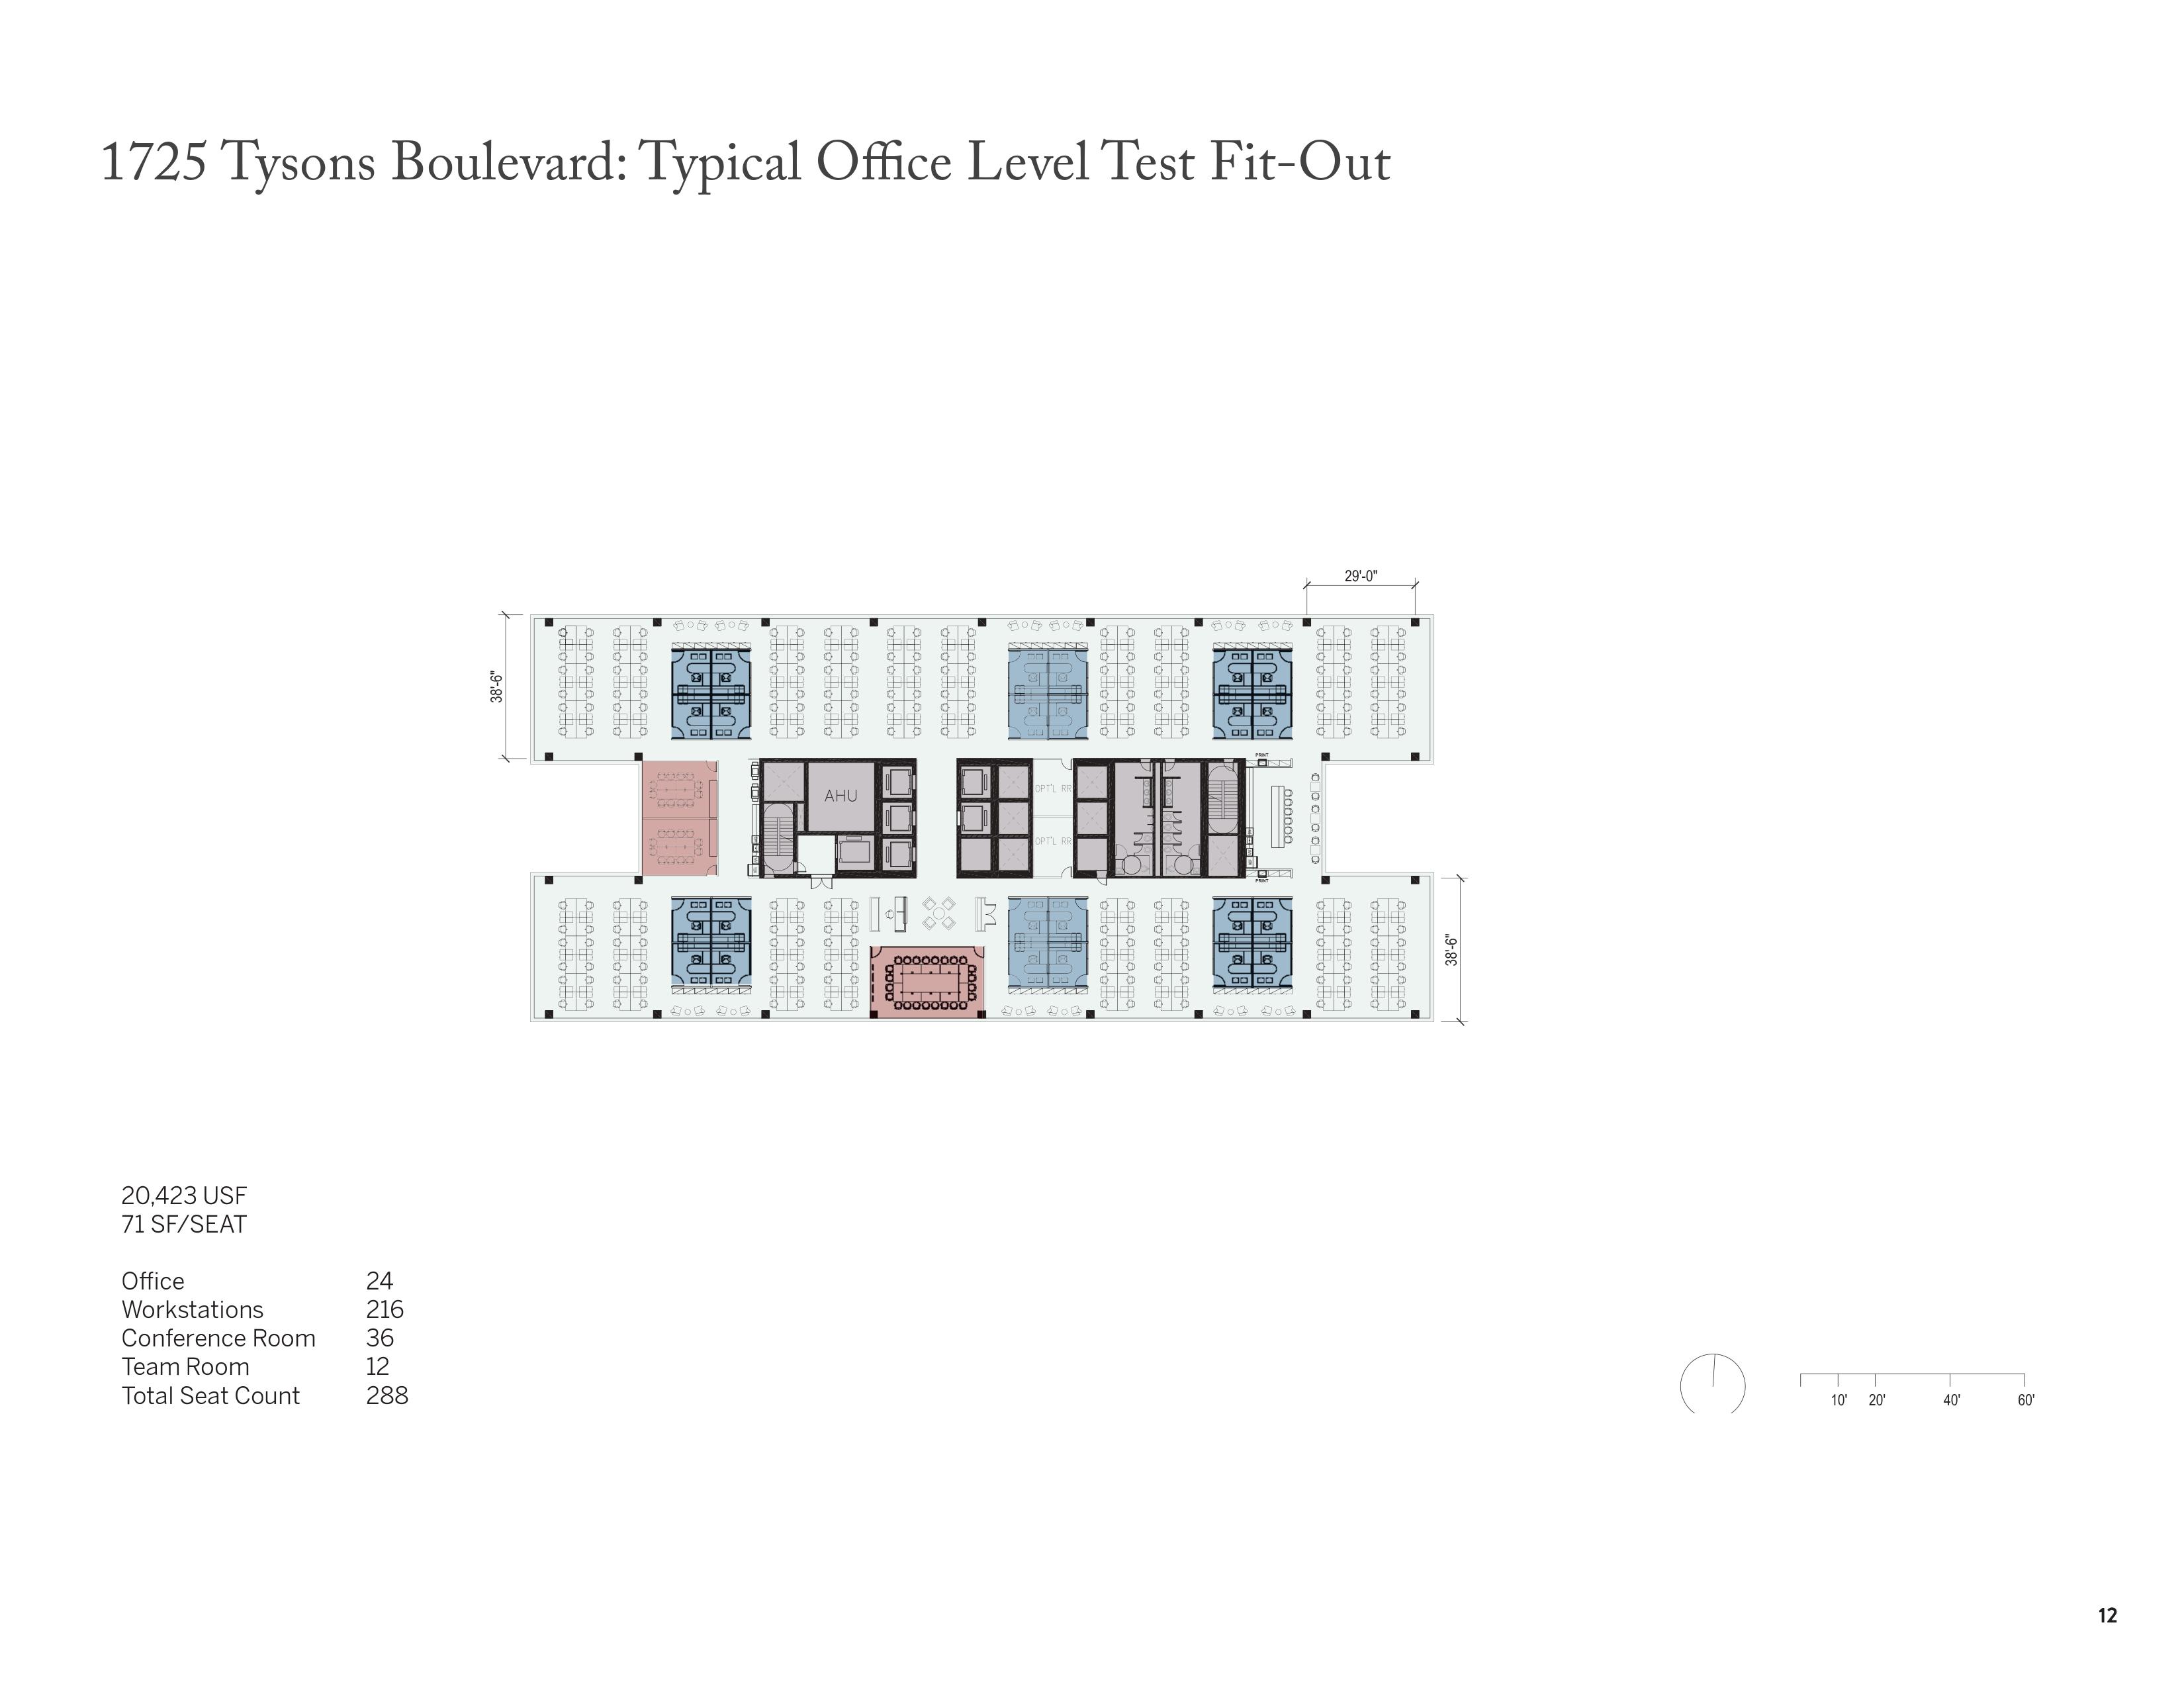 The Corporate Office Centre @ Tysons II, 1725 Tysons Blvd